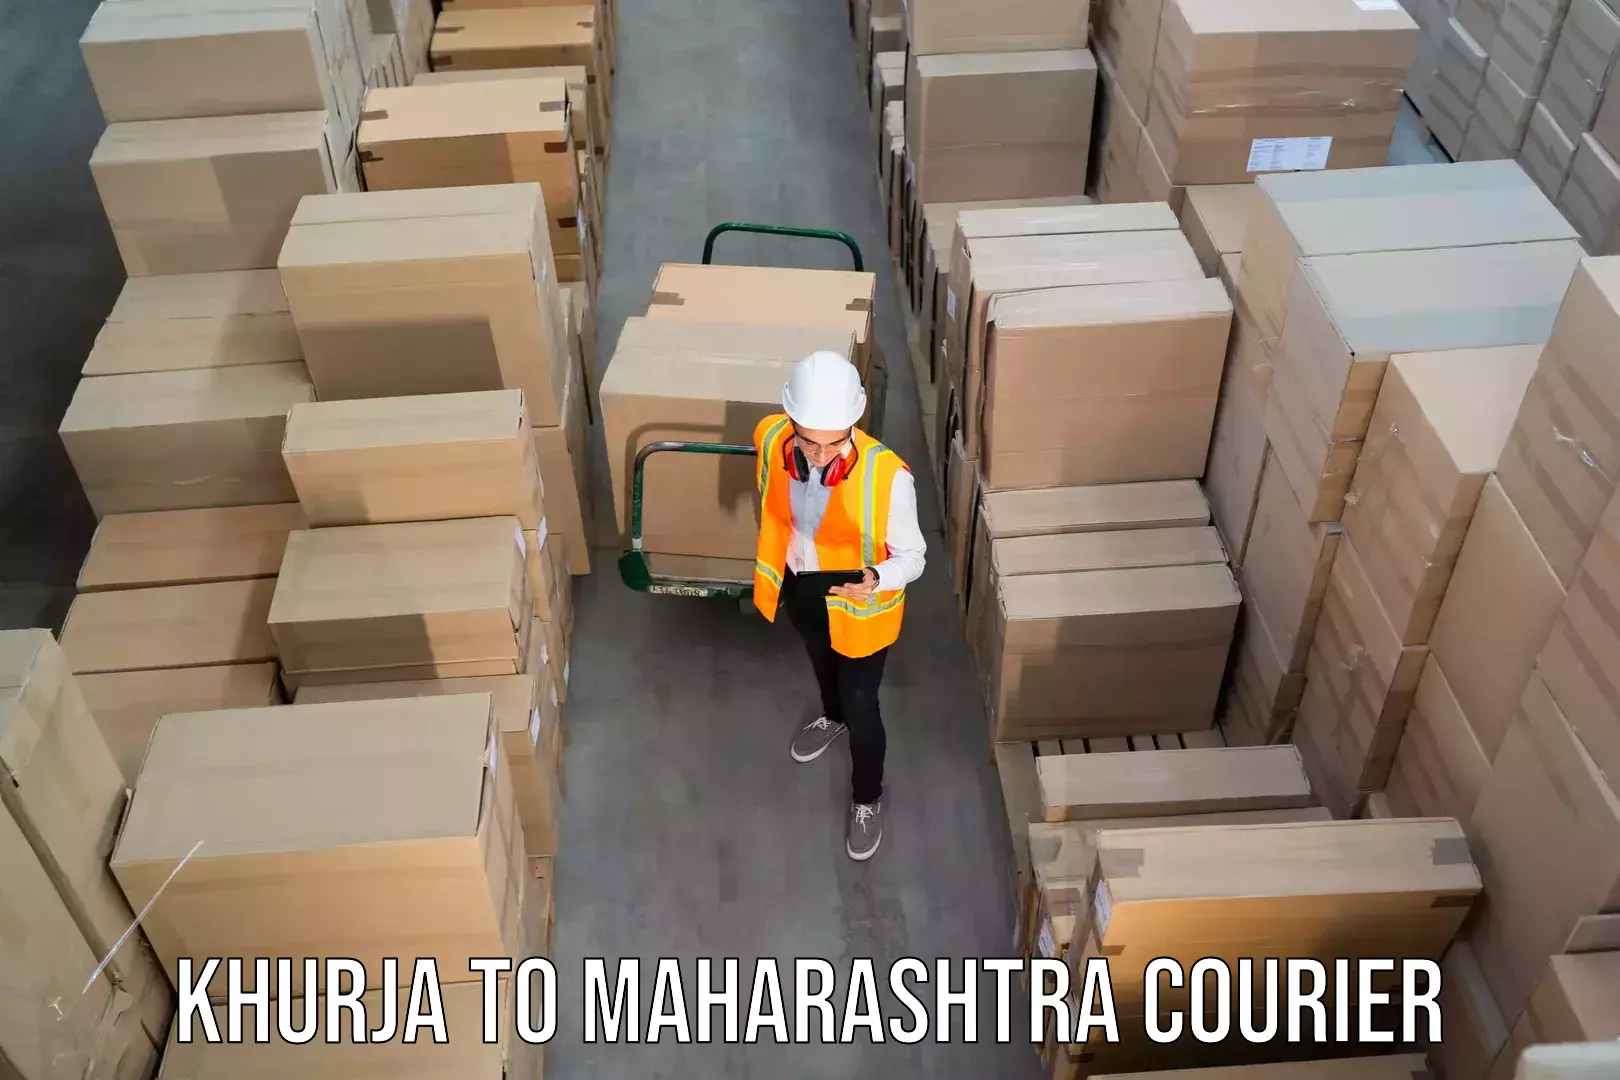 High-capacity parcel service Khurja to Chinchbunder